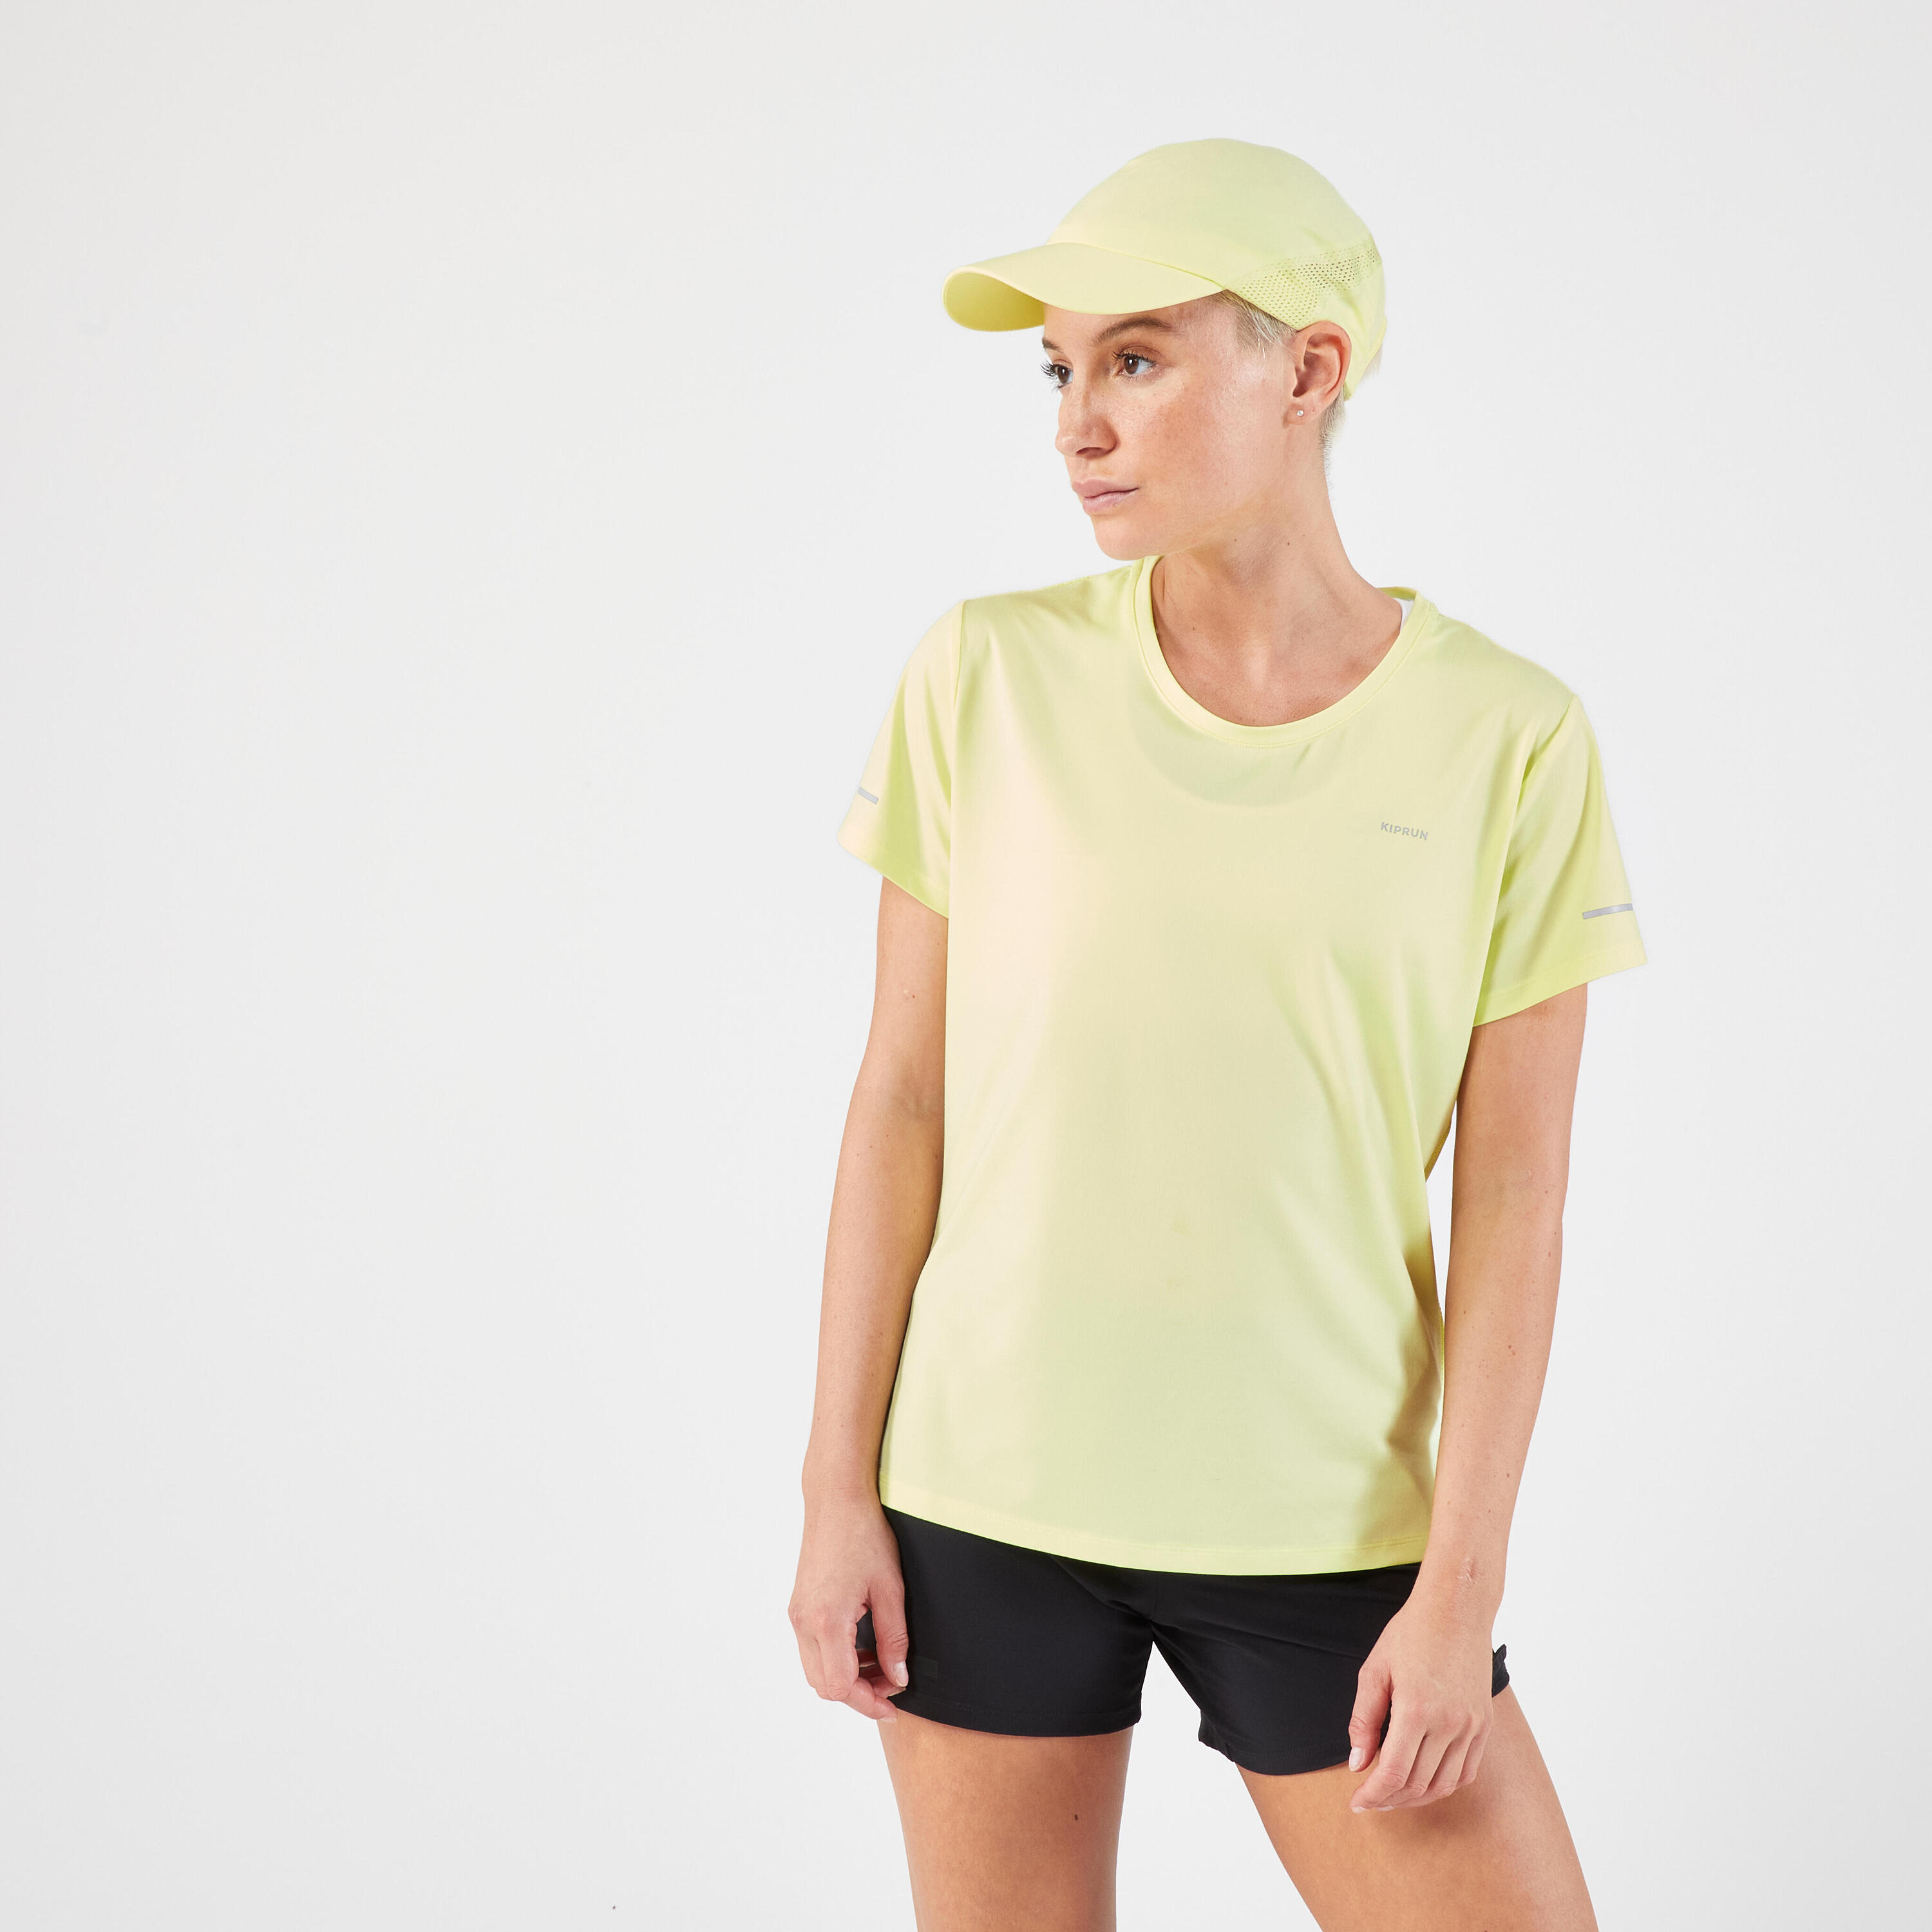 Men's Women's KIPRUN Running Adjustable Cap - yellow 5/10